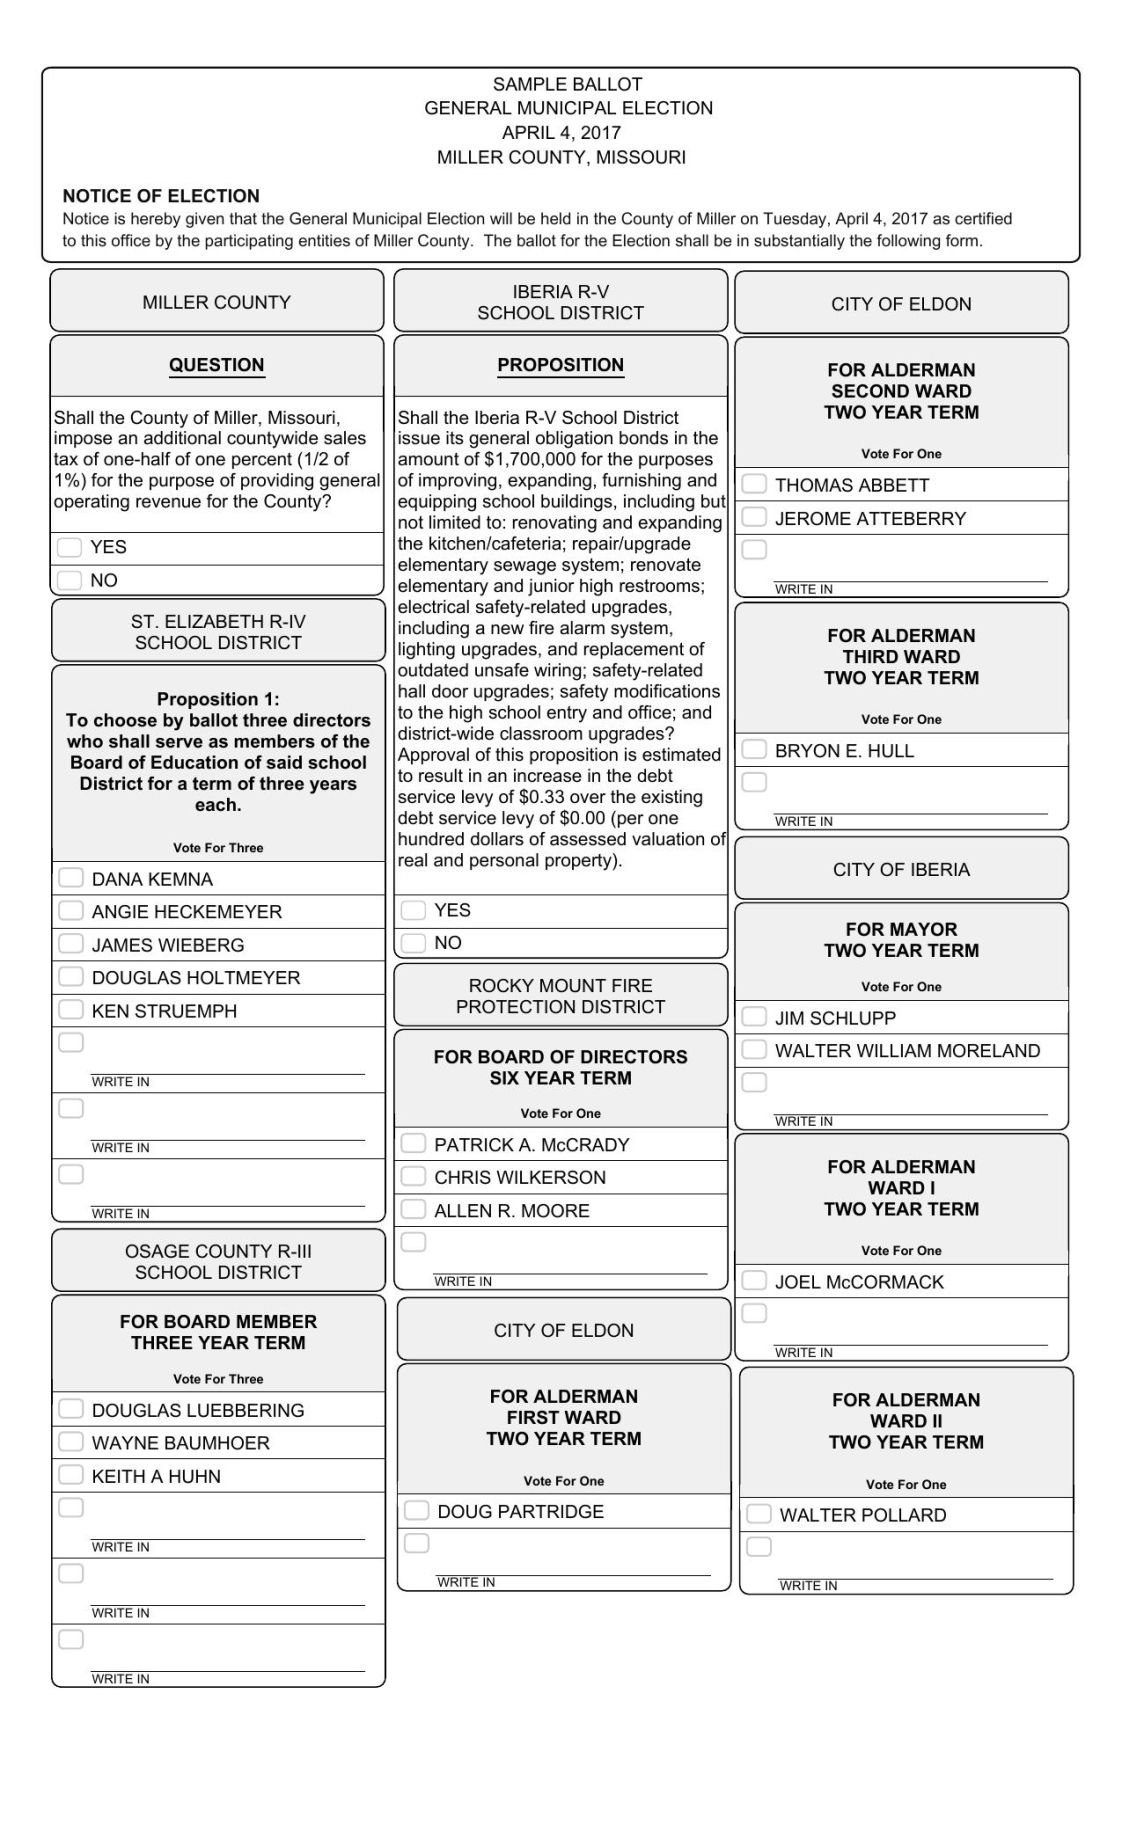 miller county sample ballot - april 4, 2017 community